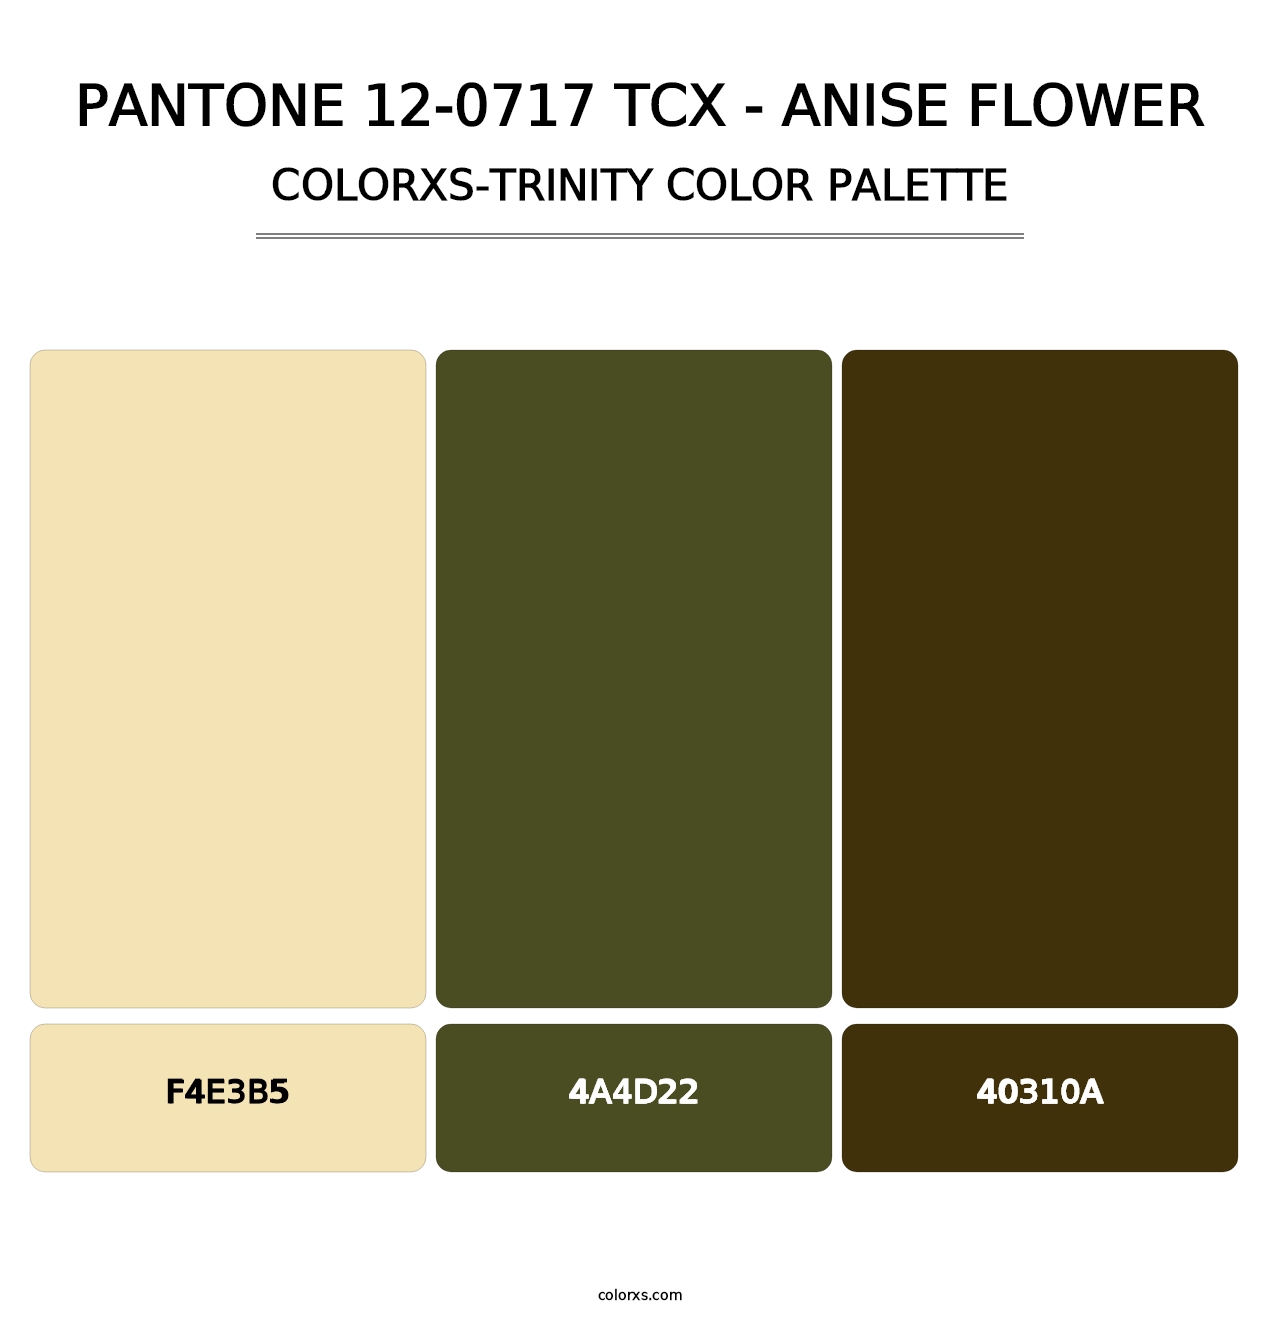 PANTONE 12-0717 TCX - Anise Flower - Colorxs Trinity Palette